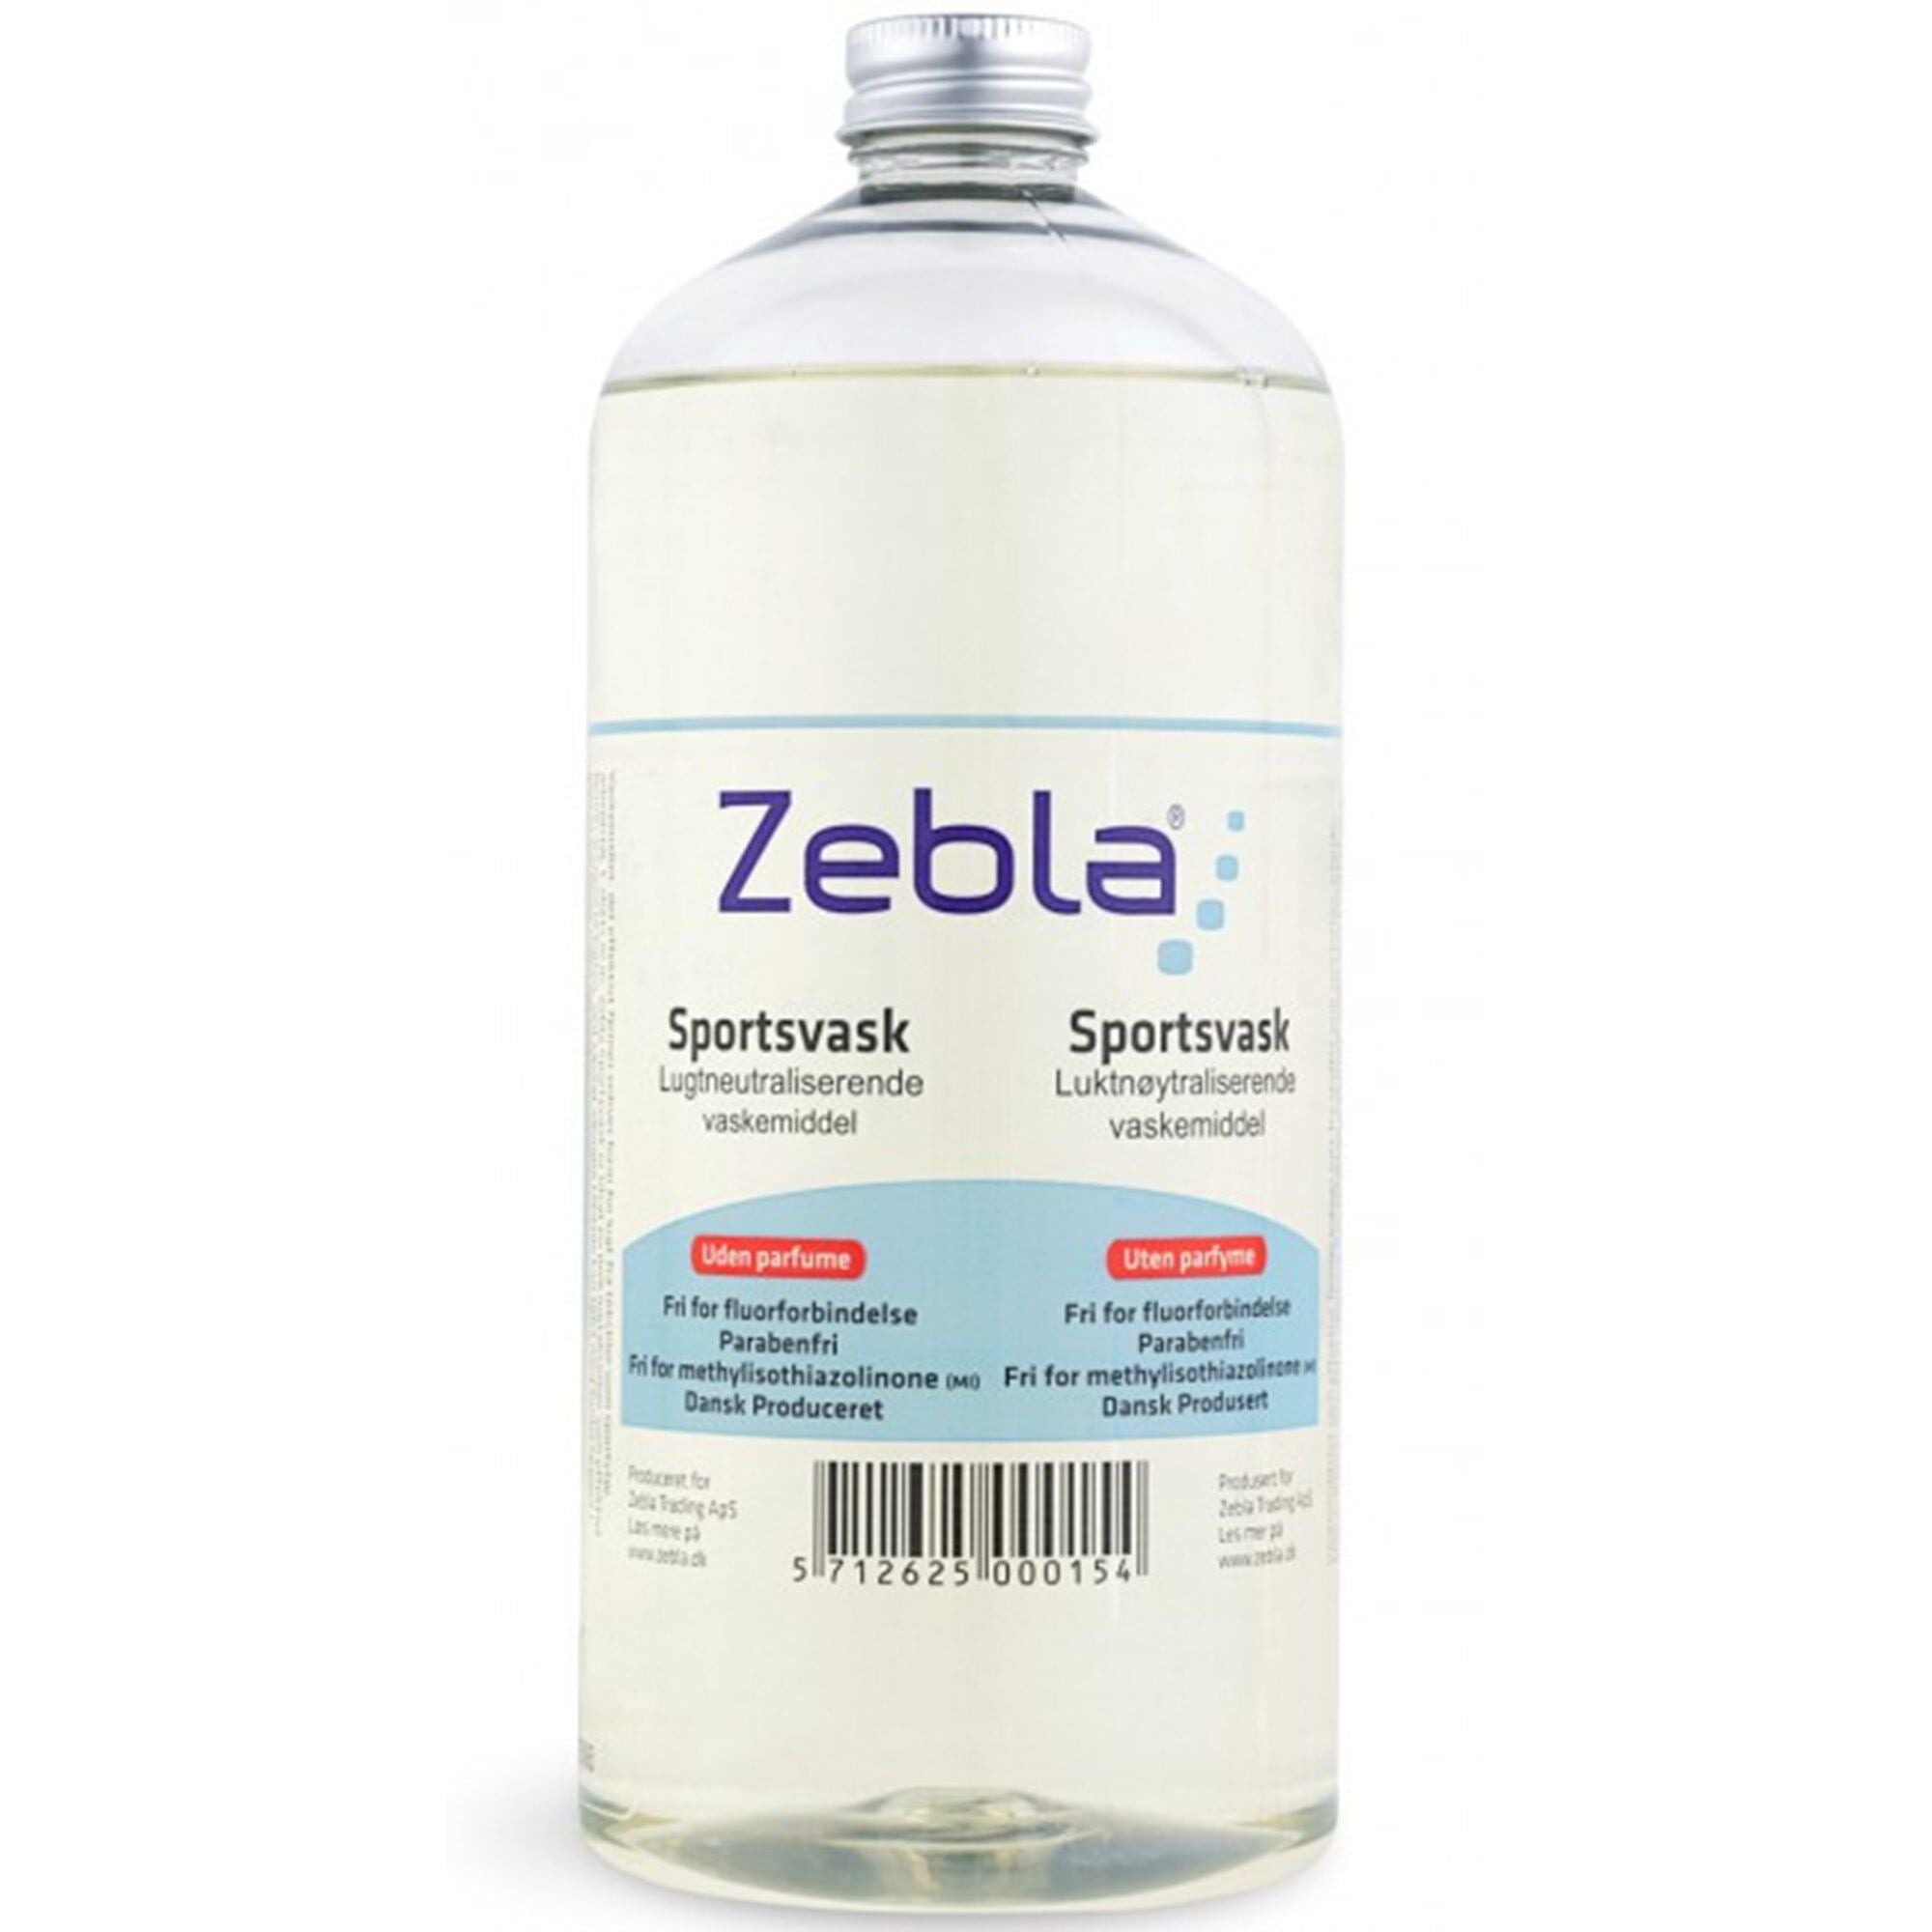 Zebla Lugtneutraliserende Vaskemiddel (1 liter)